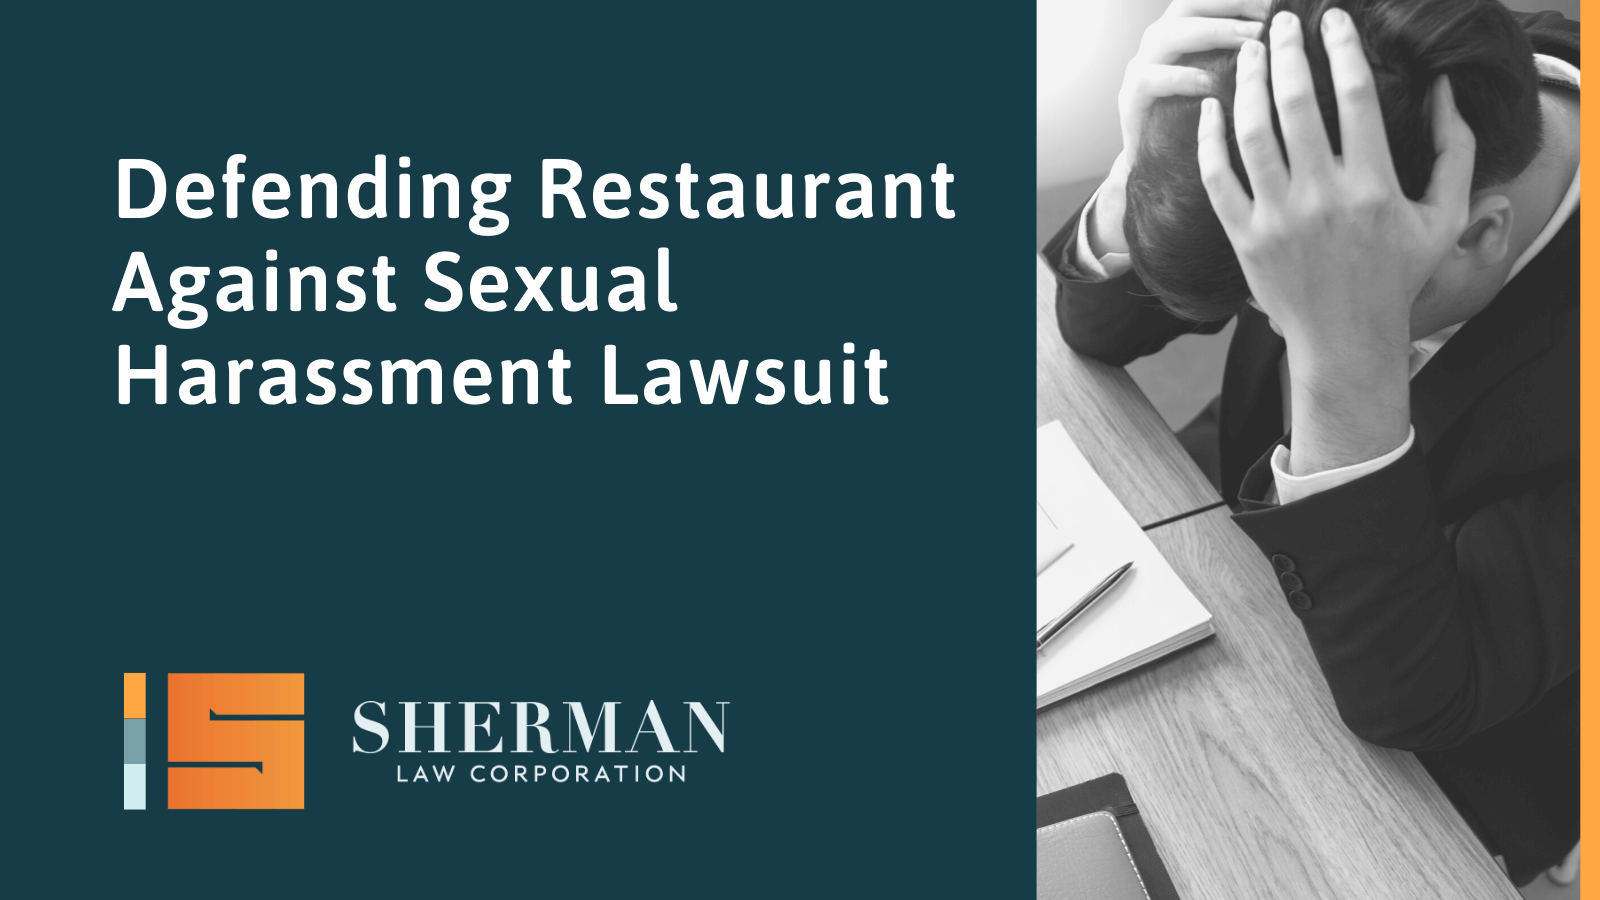 Defending Restaurant Against Sexual Harassment Lawsuit - sherman law corporation